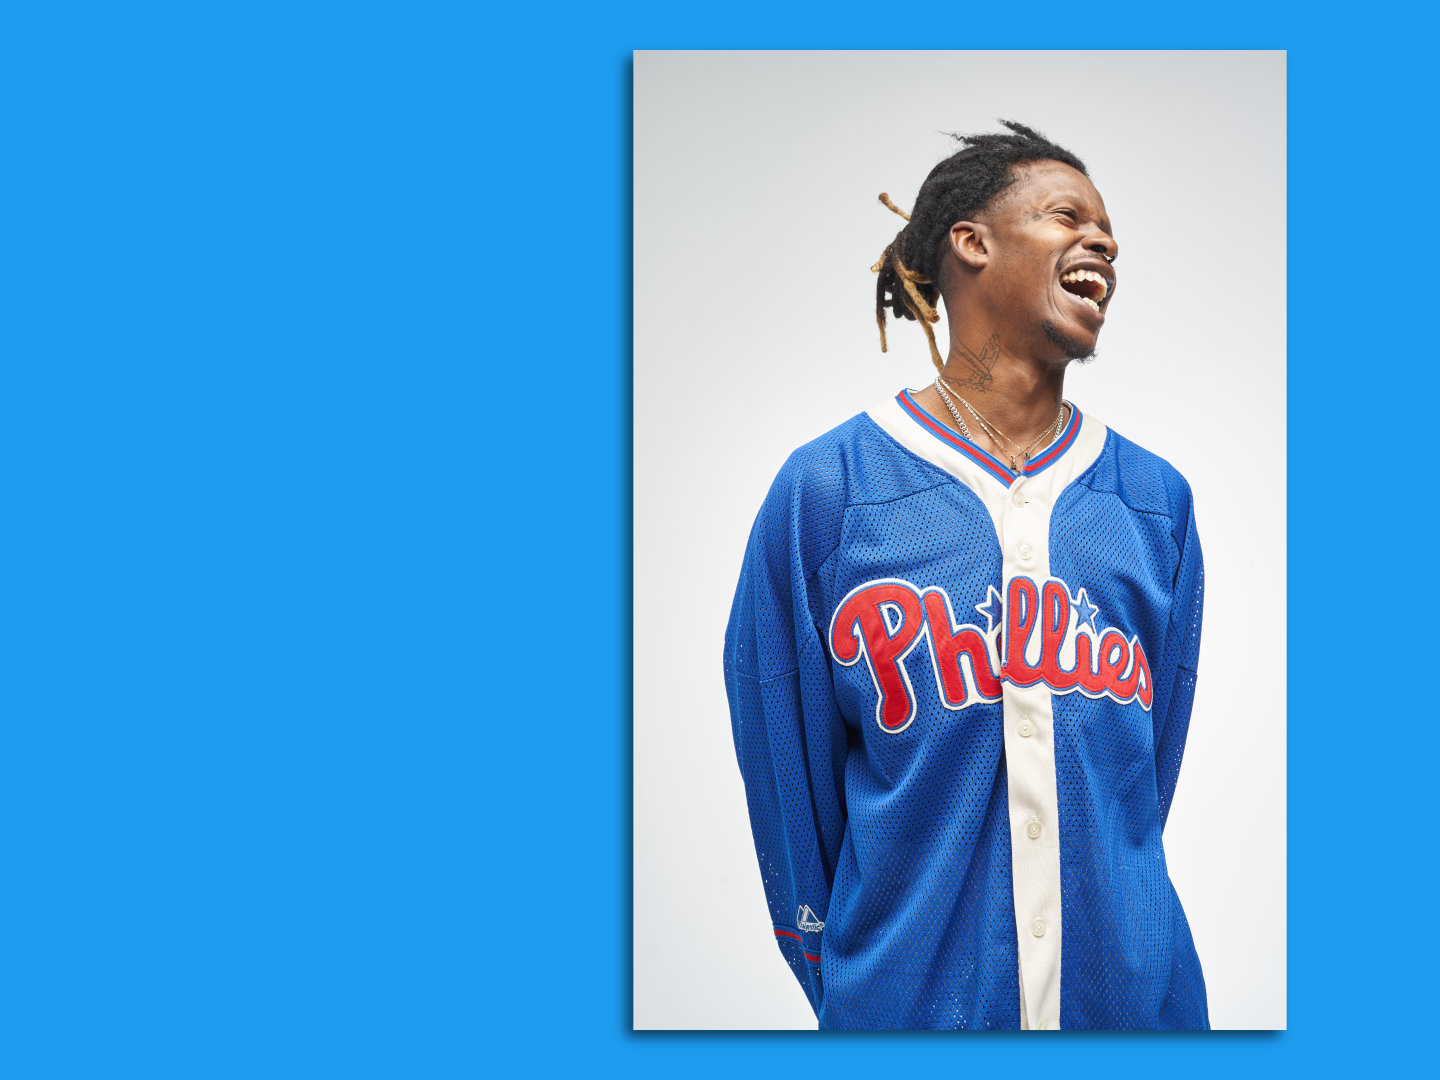 Meet Philadelphia's next rap star, Blue w3rd - Axios Philadelphia